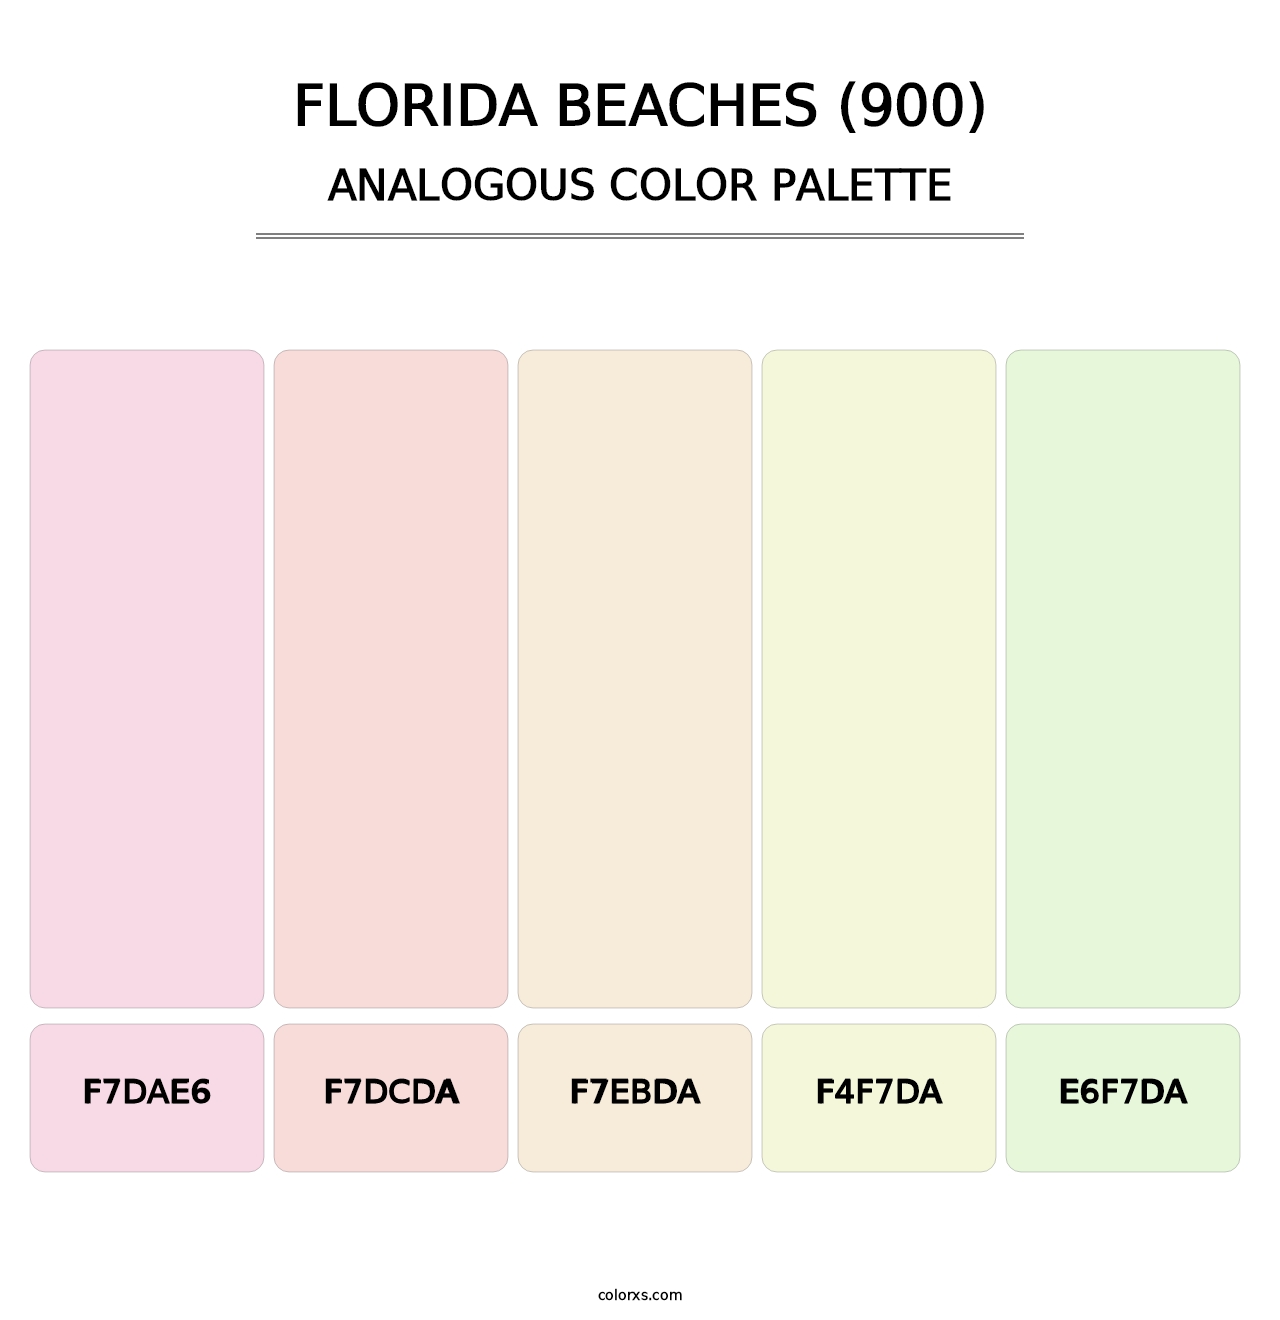 Florida Beaches (900) - Analogous Color Palette